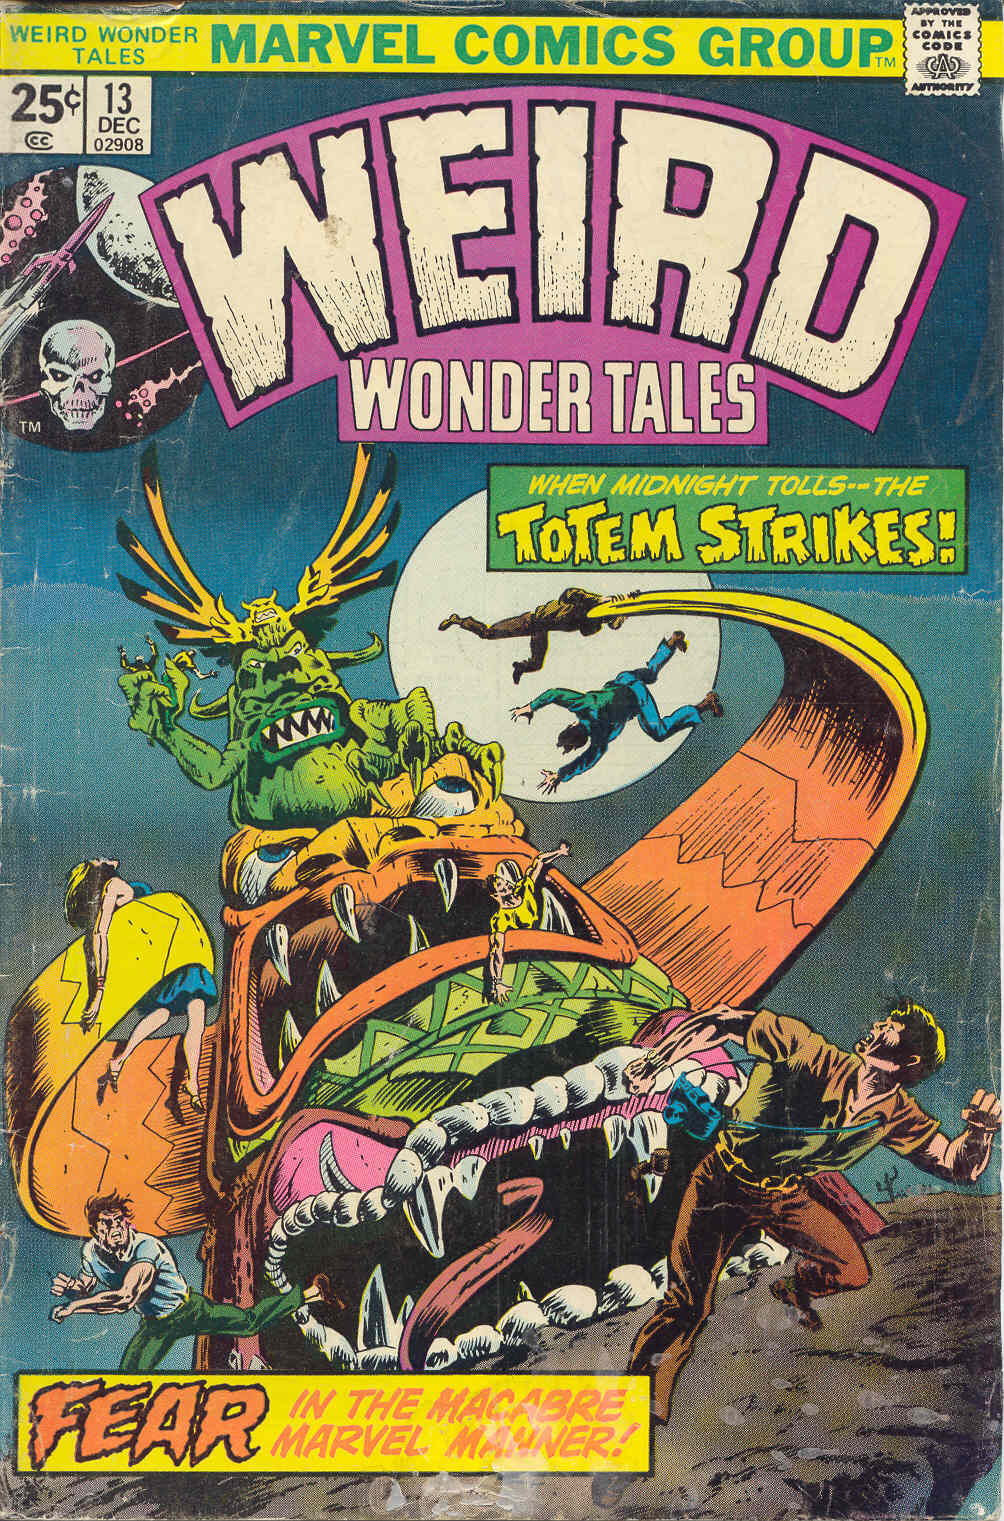 Read online Weird Wonder Tales comic -  Issue #13 - 1